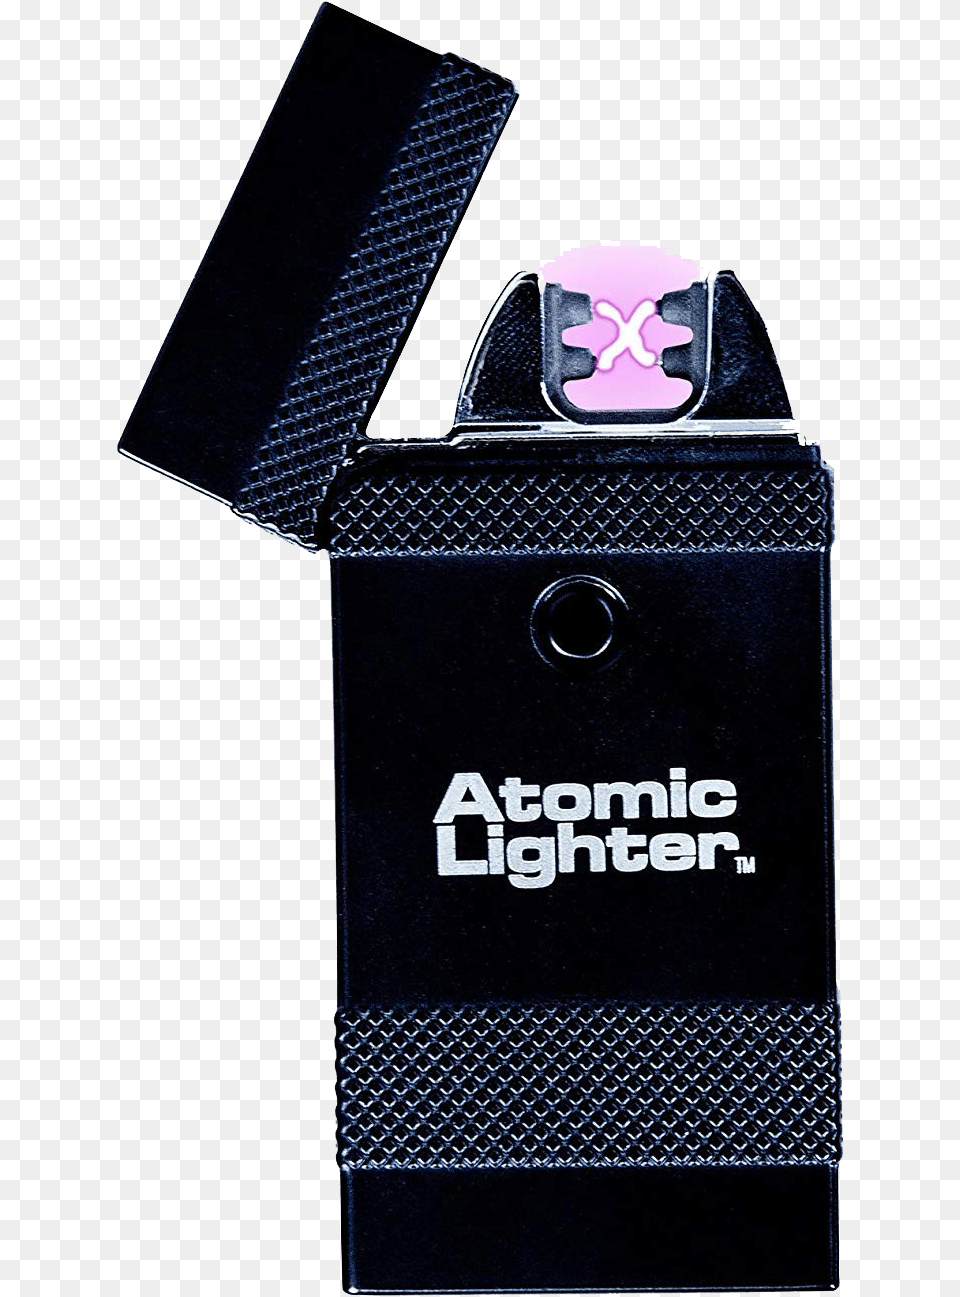 Bic Lighter Atomic Lighter Free Transparent Png